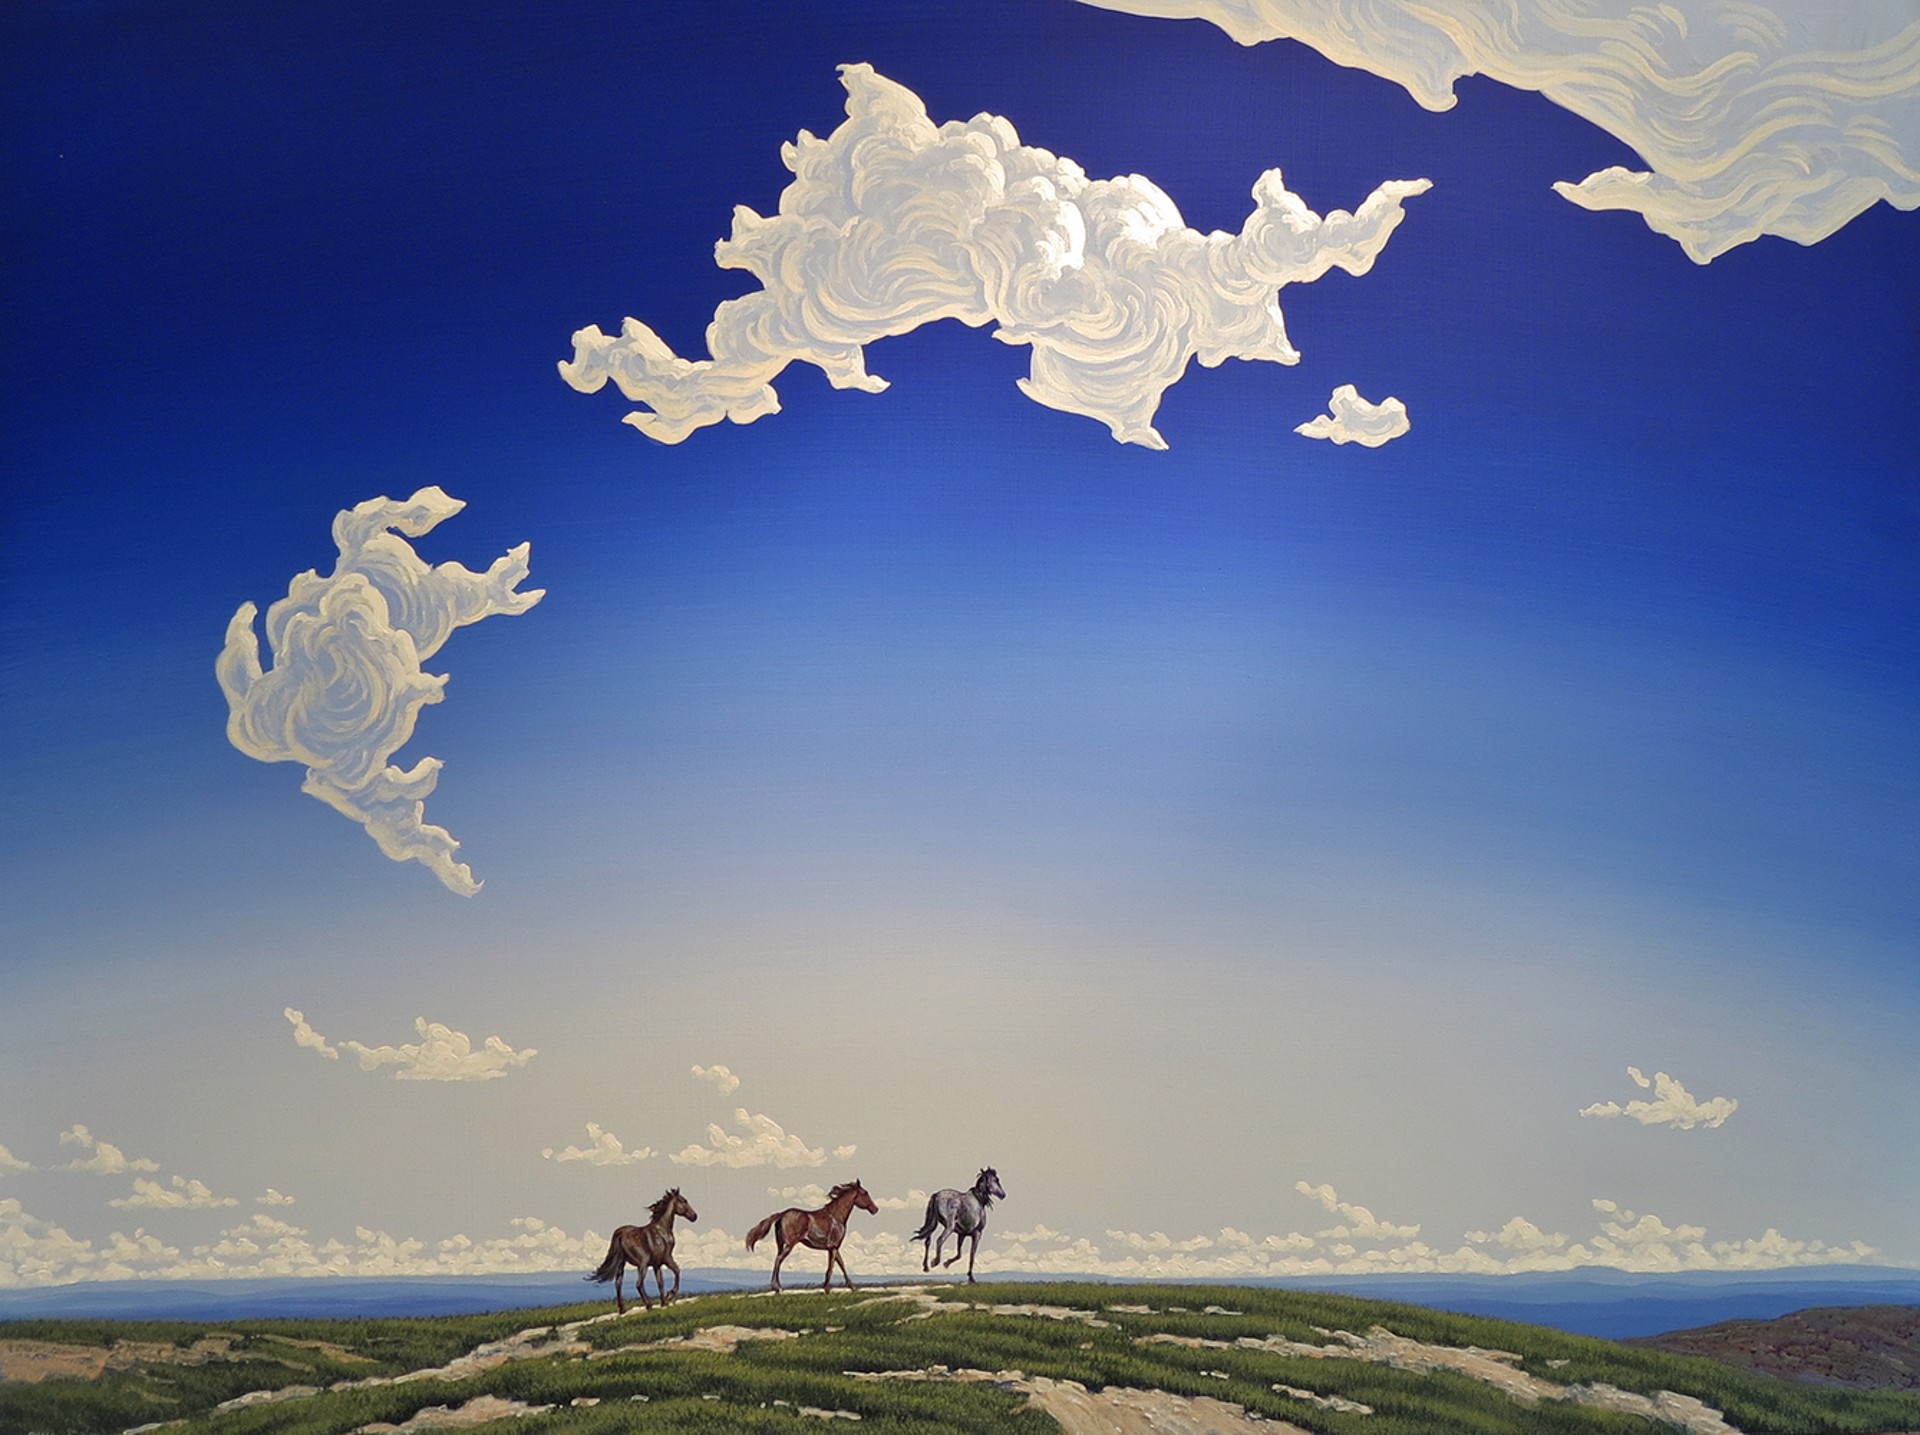 Running Horses by Phil Epp